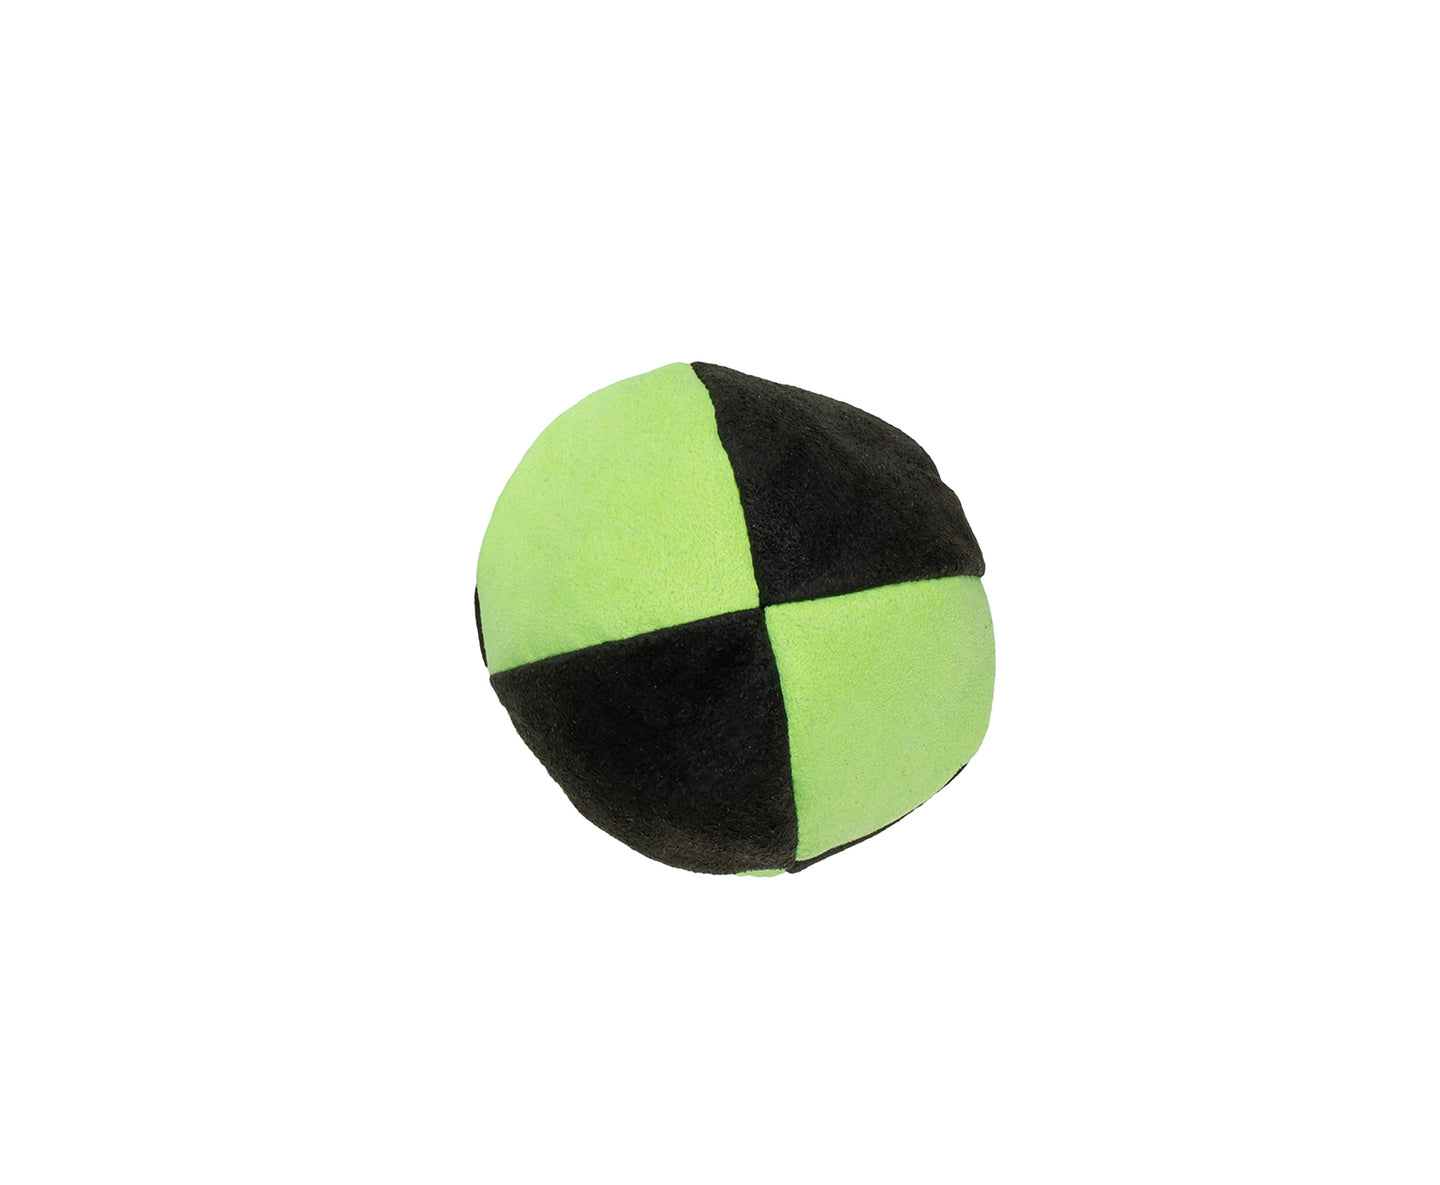 Juggle Dream Swag Bag - 70-gram Juggling Ball - green/black colour